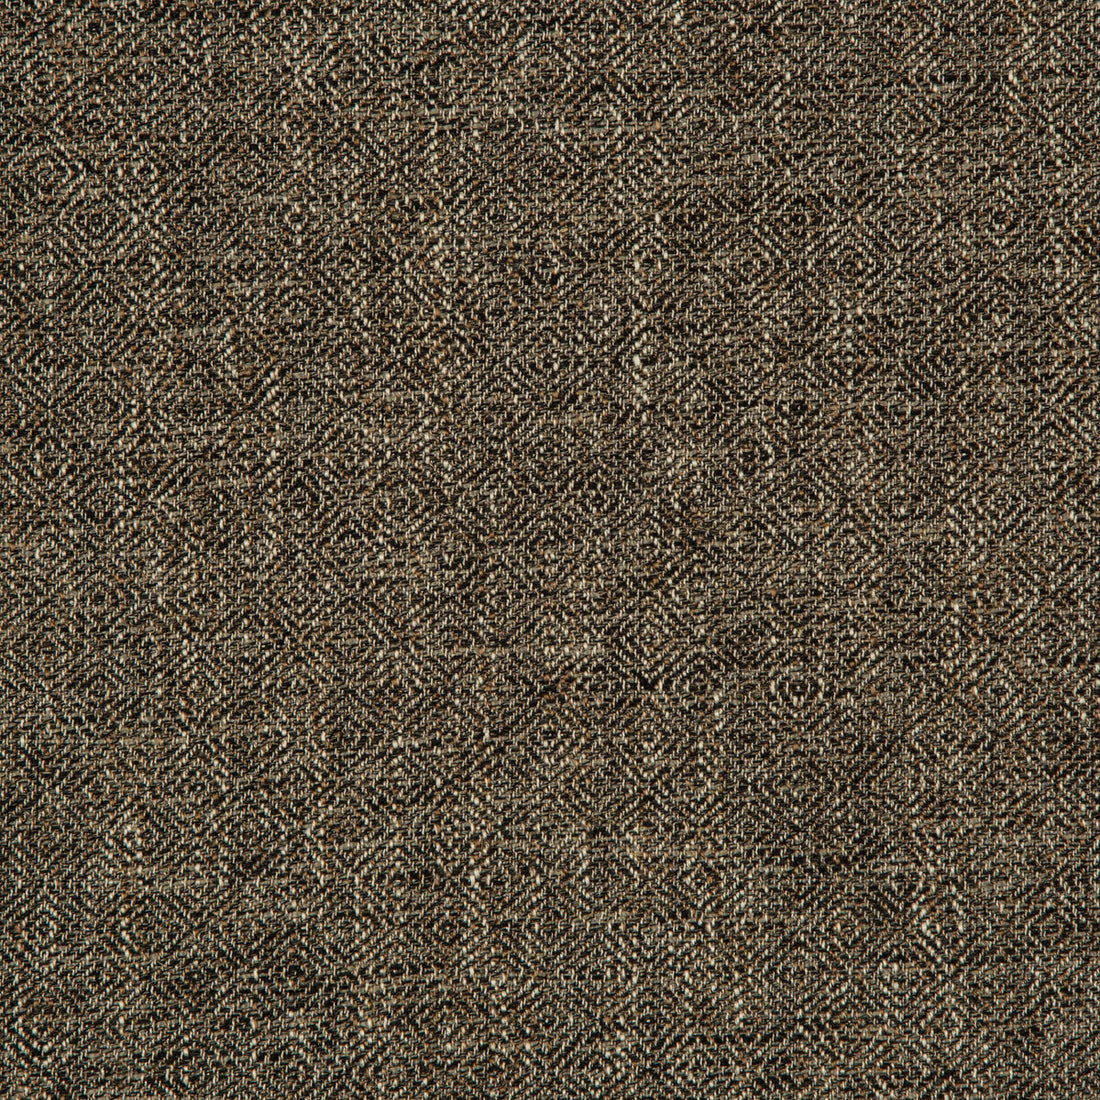 Kravet Smart fabric in 35932-816 color - pattern 35932.816.0 - by Kravet Smart in the Performance Kravetarmor collection